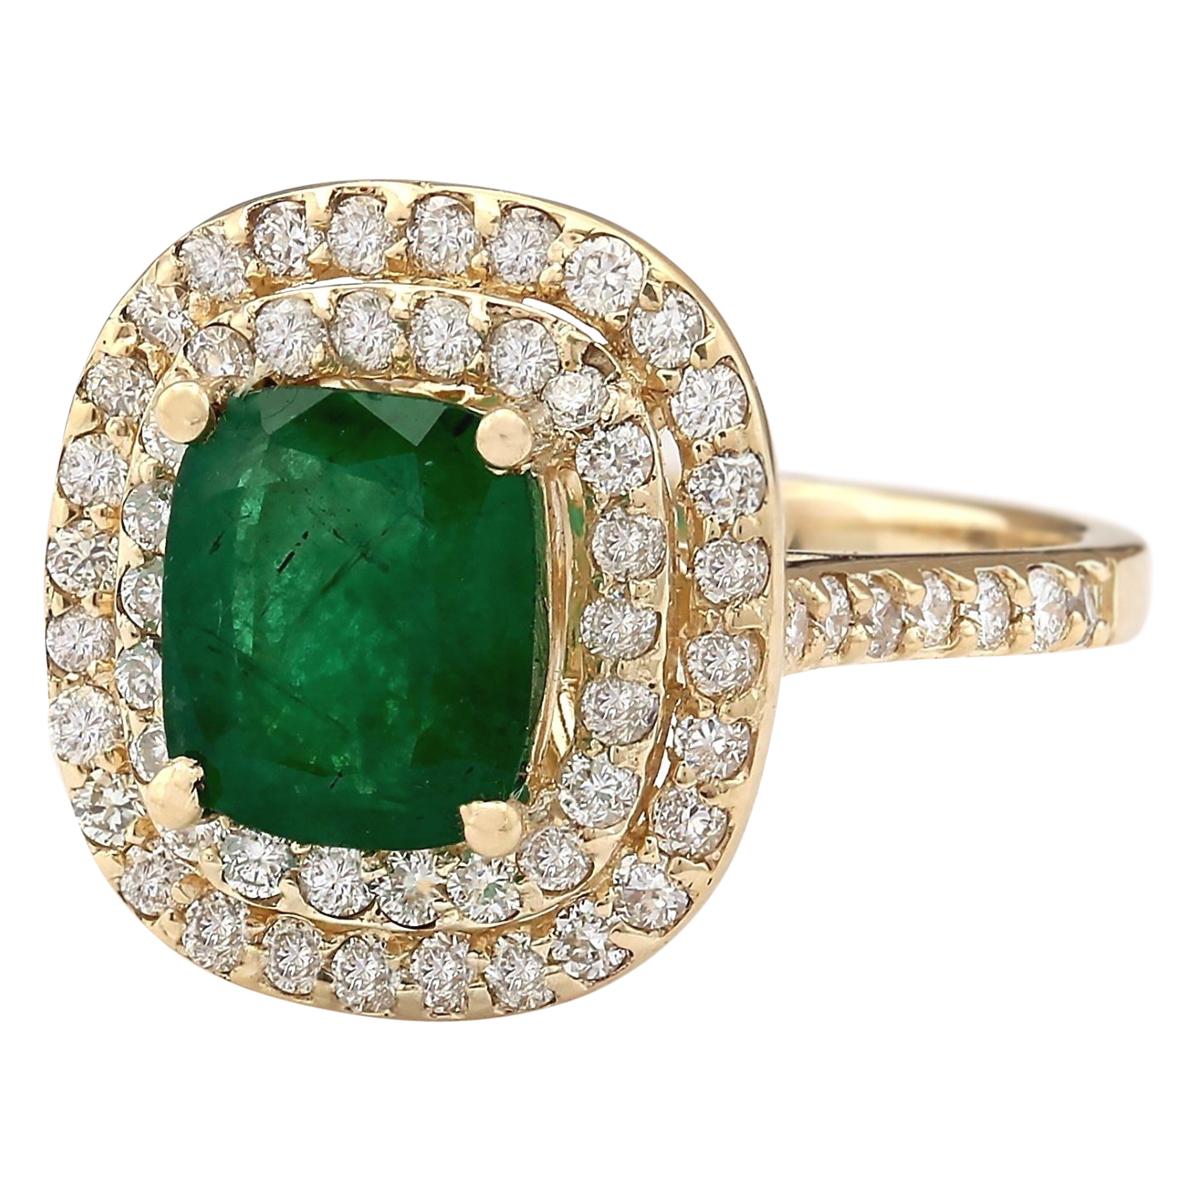 2.88 Carat Natural Emerald 14 Karat Yellow Gold Diamond Ring
Stamped: 14K Yellow Gold
Total Ring Weight: 6.7 Grams
Total Natural Emerald Weight is 1.88 Carat (Measures: 8.00x6.00 mm)
Color: Green
Total Natural Diamond Weight is 1.00 Carat
Color: